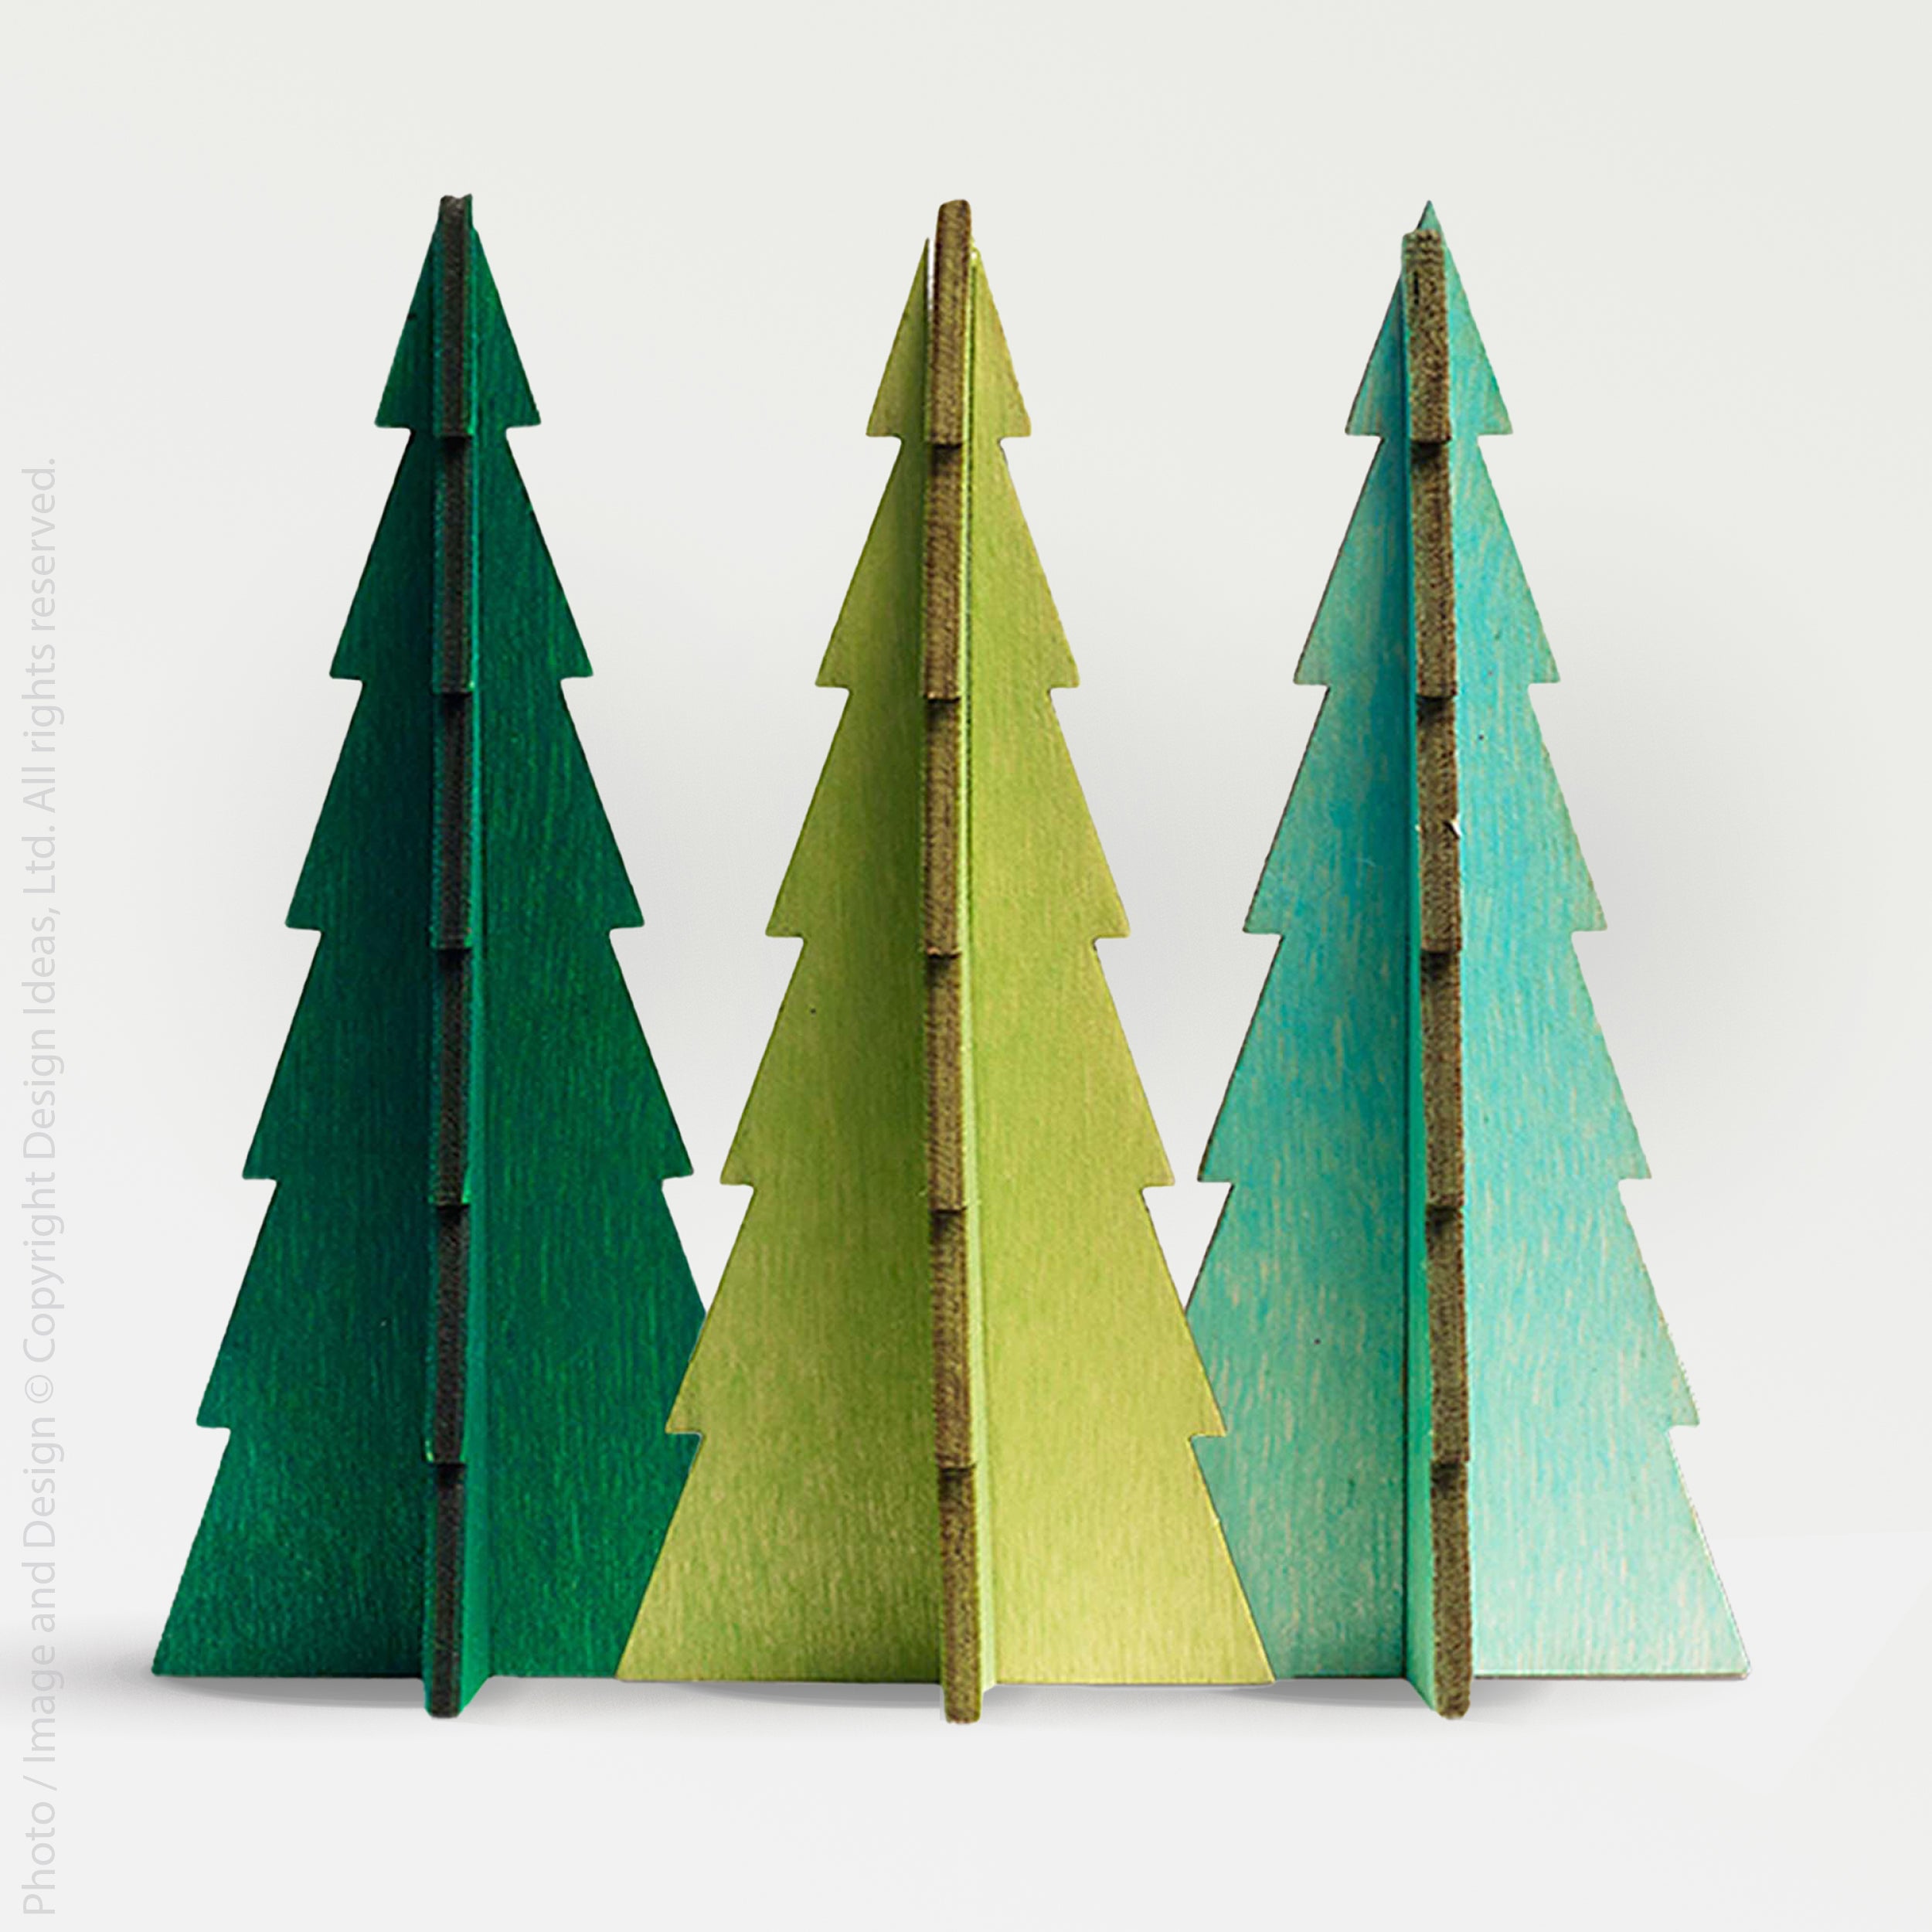 Tannenbaum™ Wood Trees (17 Inch - Set of 3)